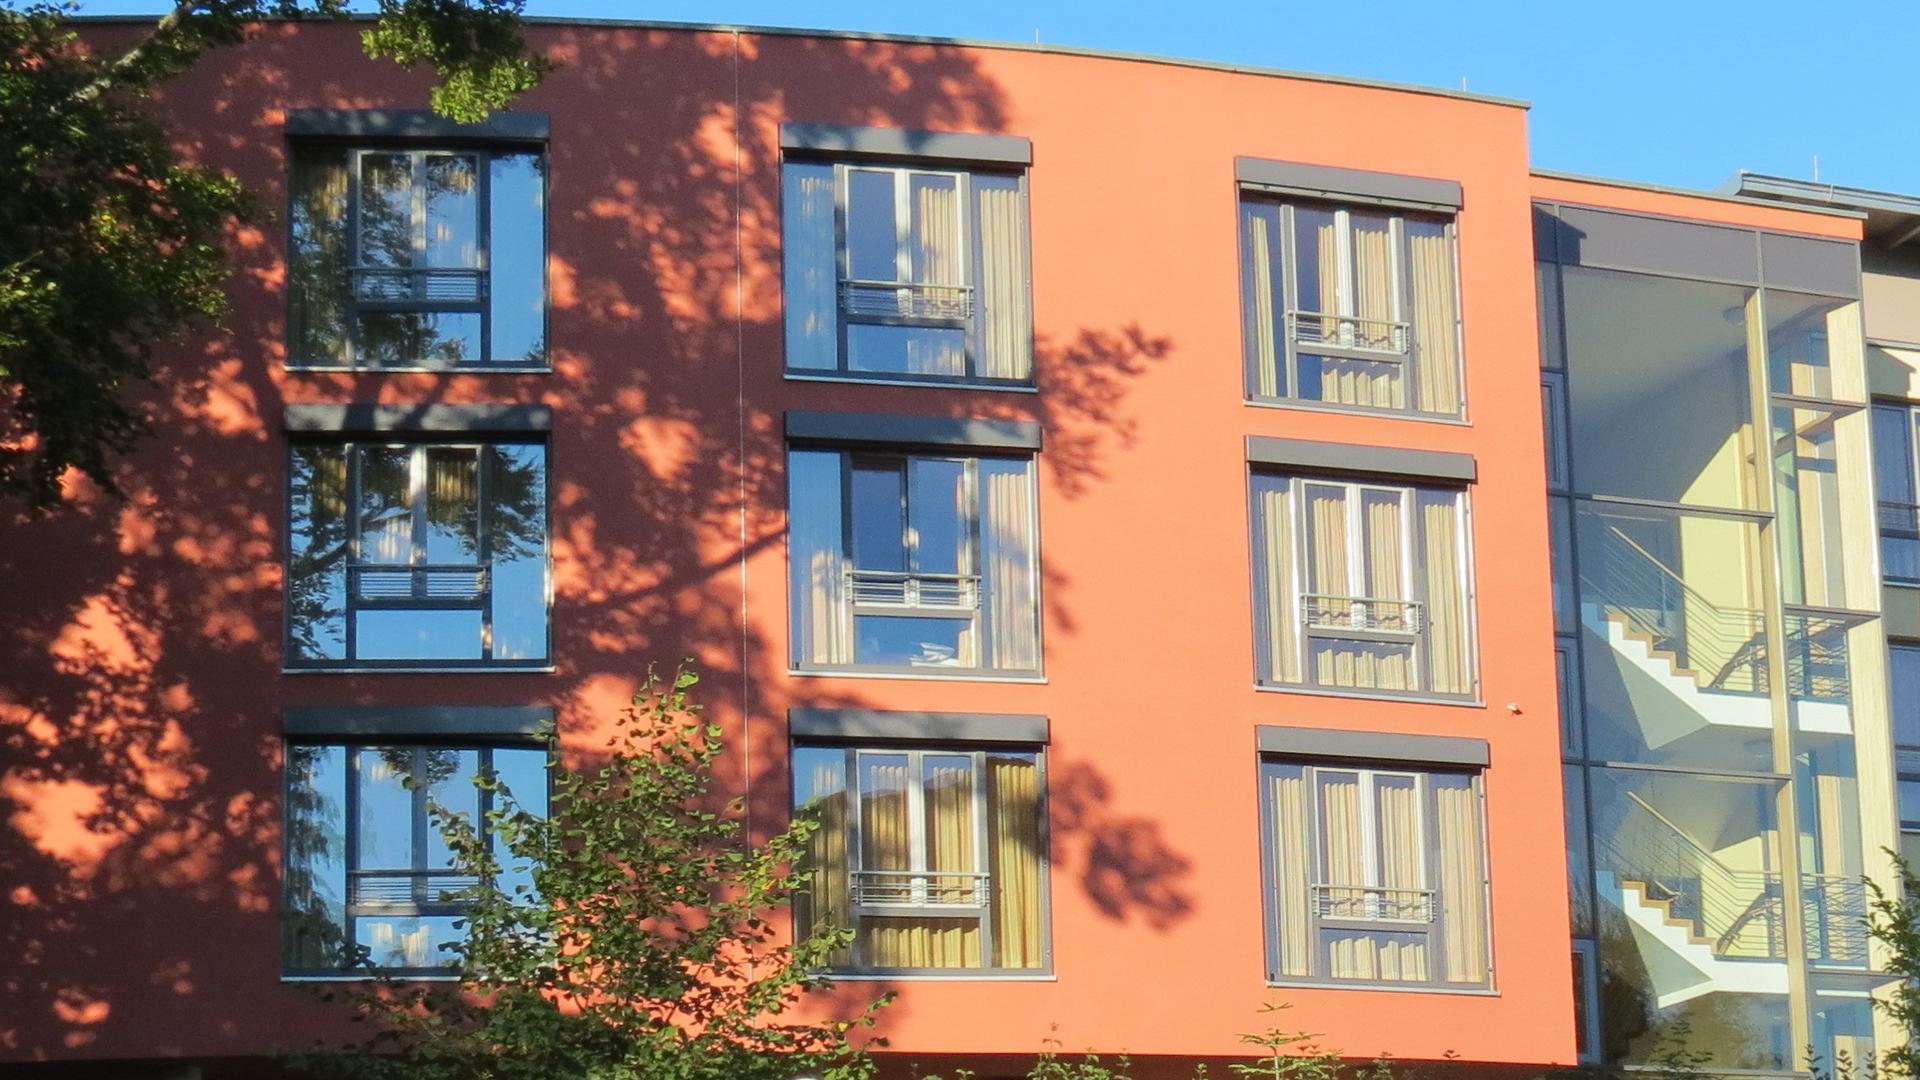 Hotel am Kurpark Bad Herrenalb 2015, Verkauf gescheitert